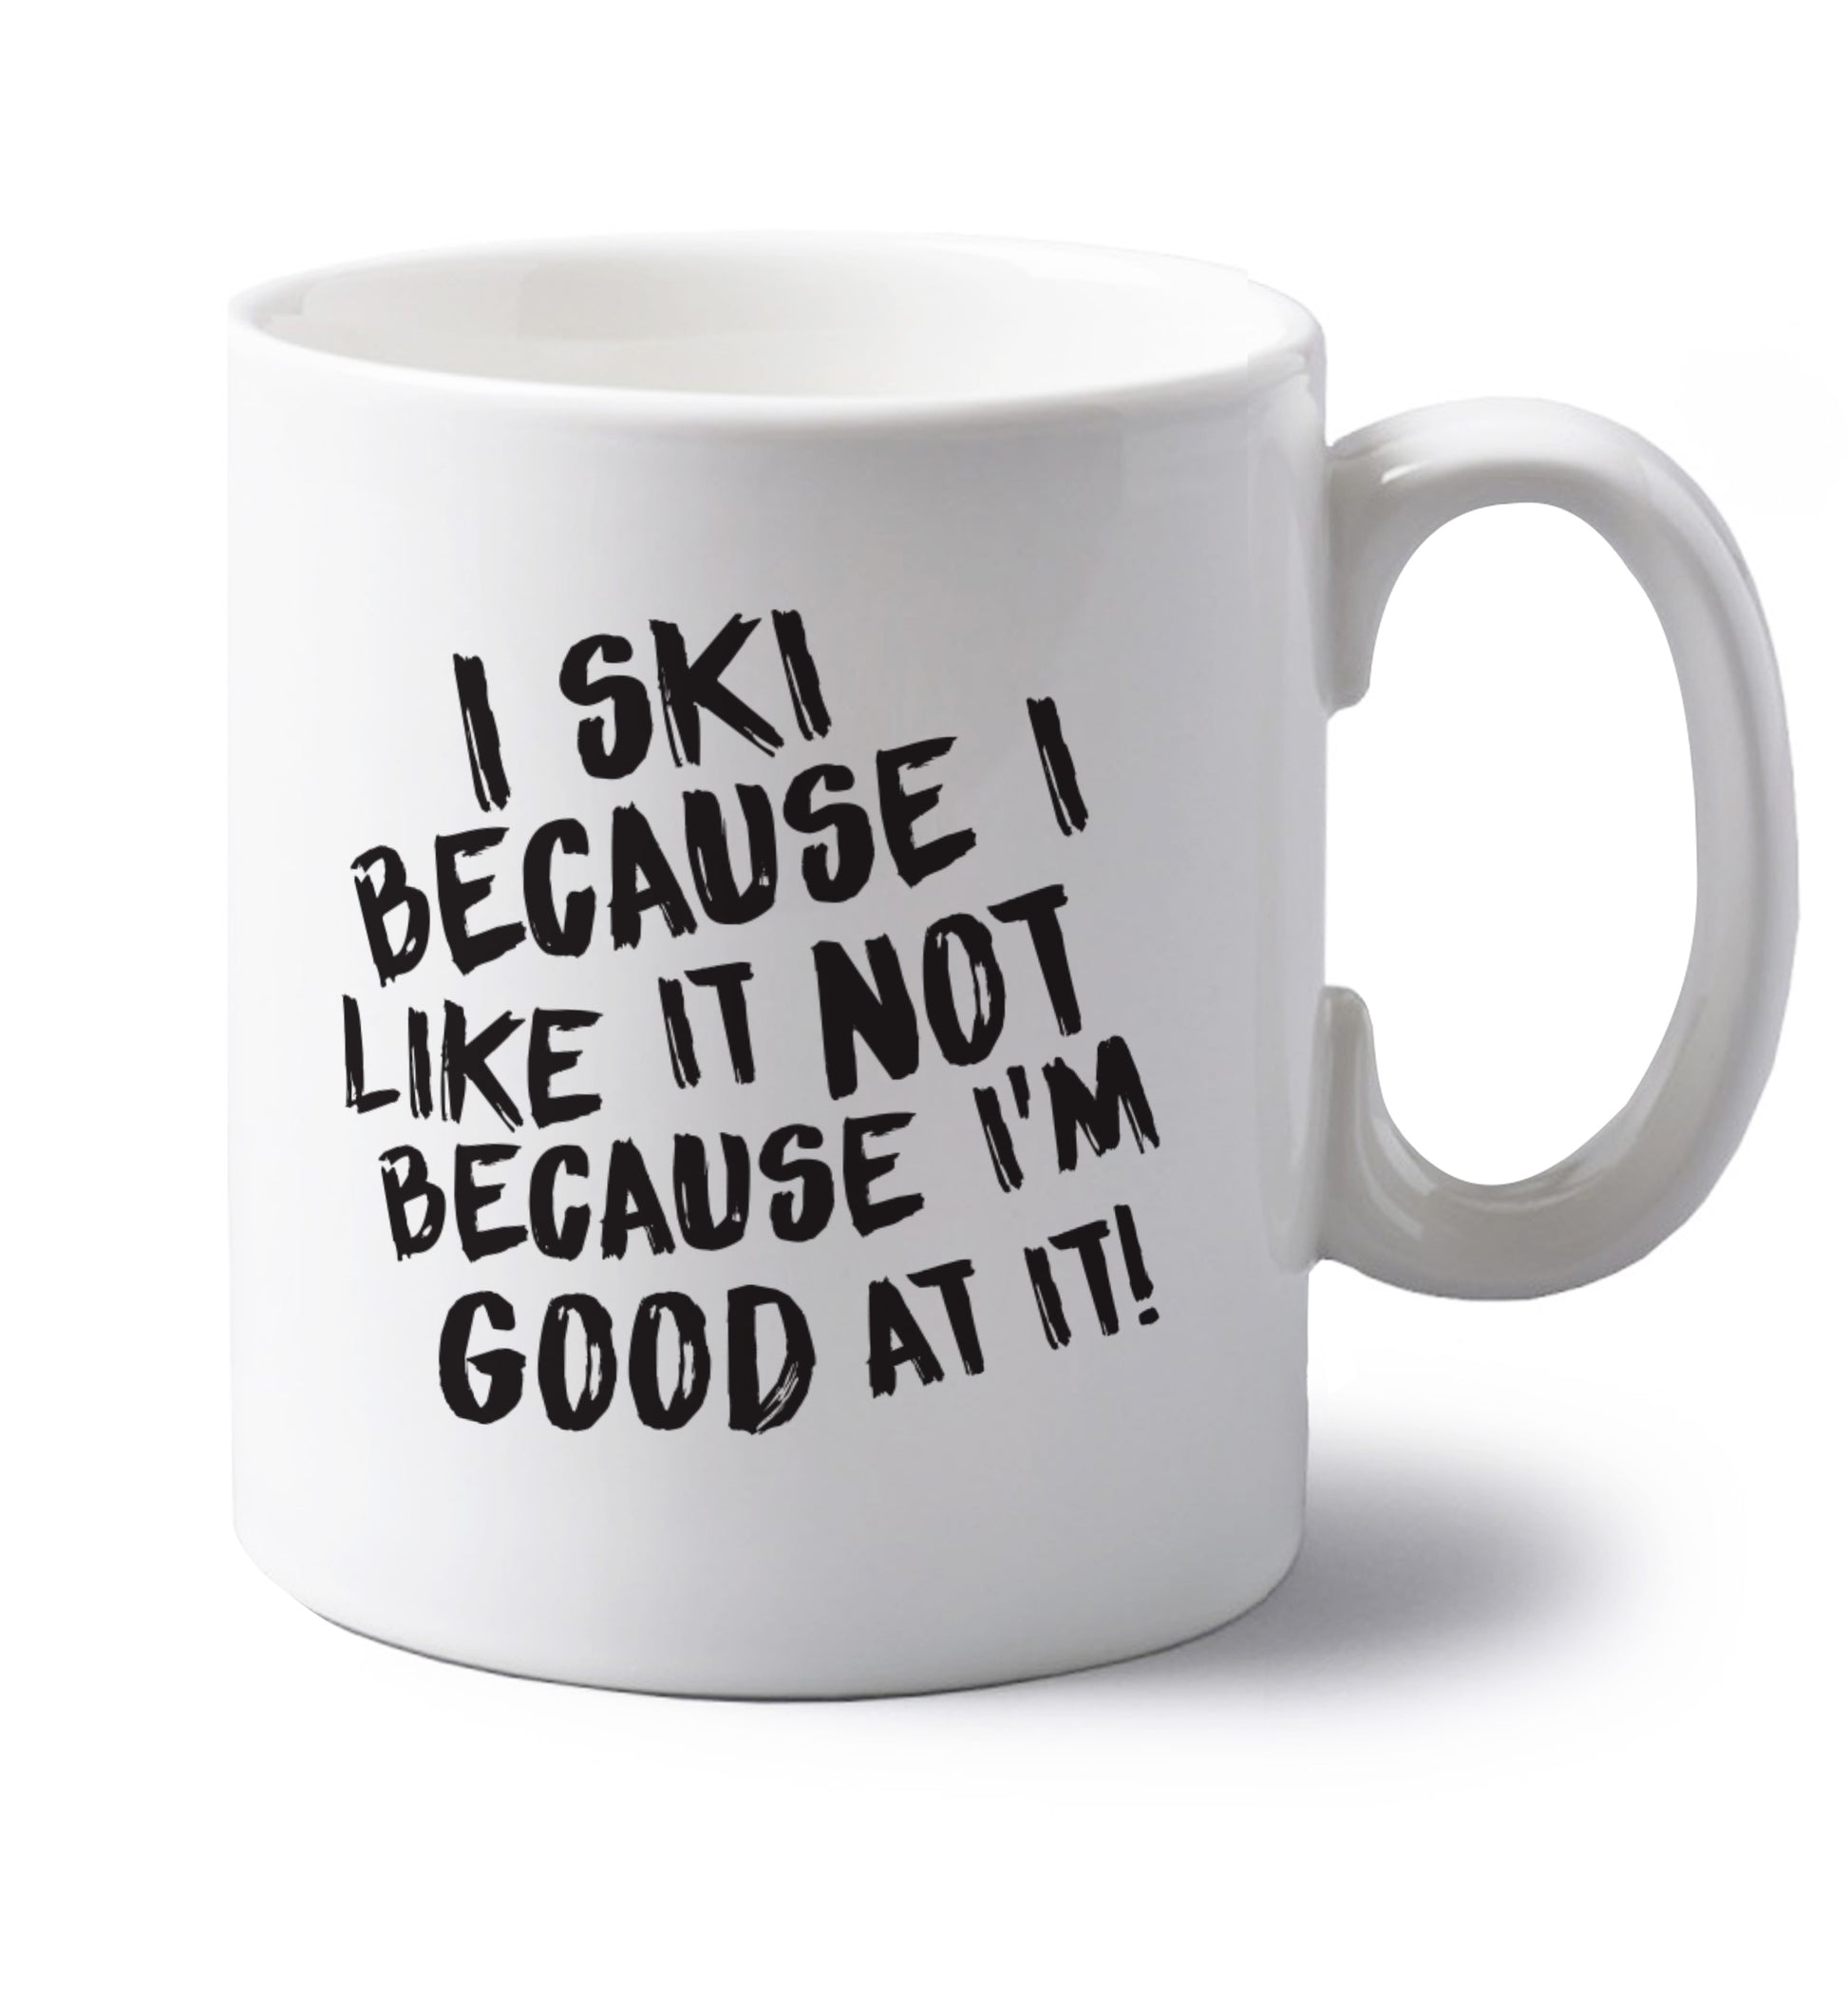 I ski because I like it not because I'm good at it left handed white ceramic mug 